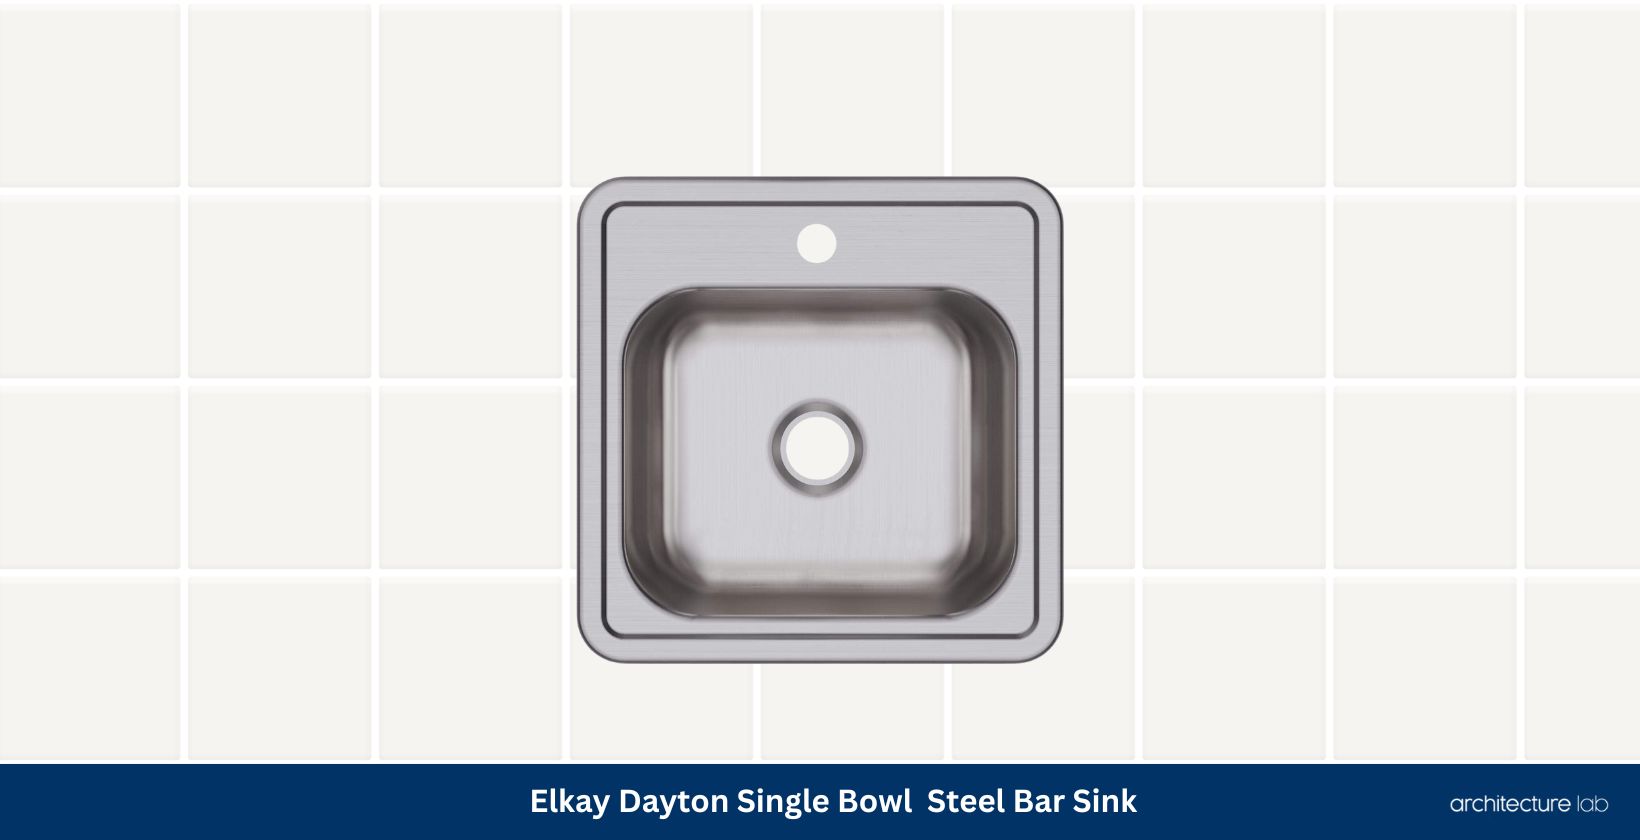 Elkay dayton single bowl